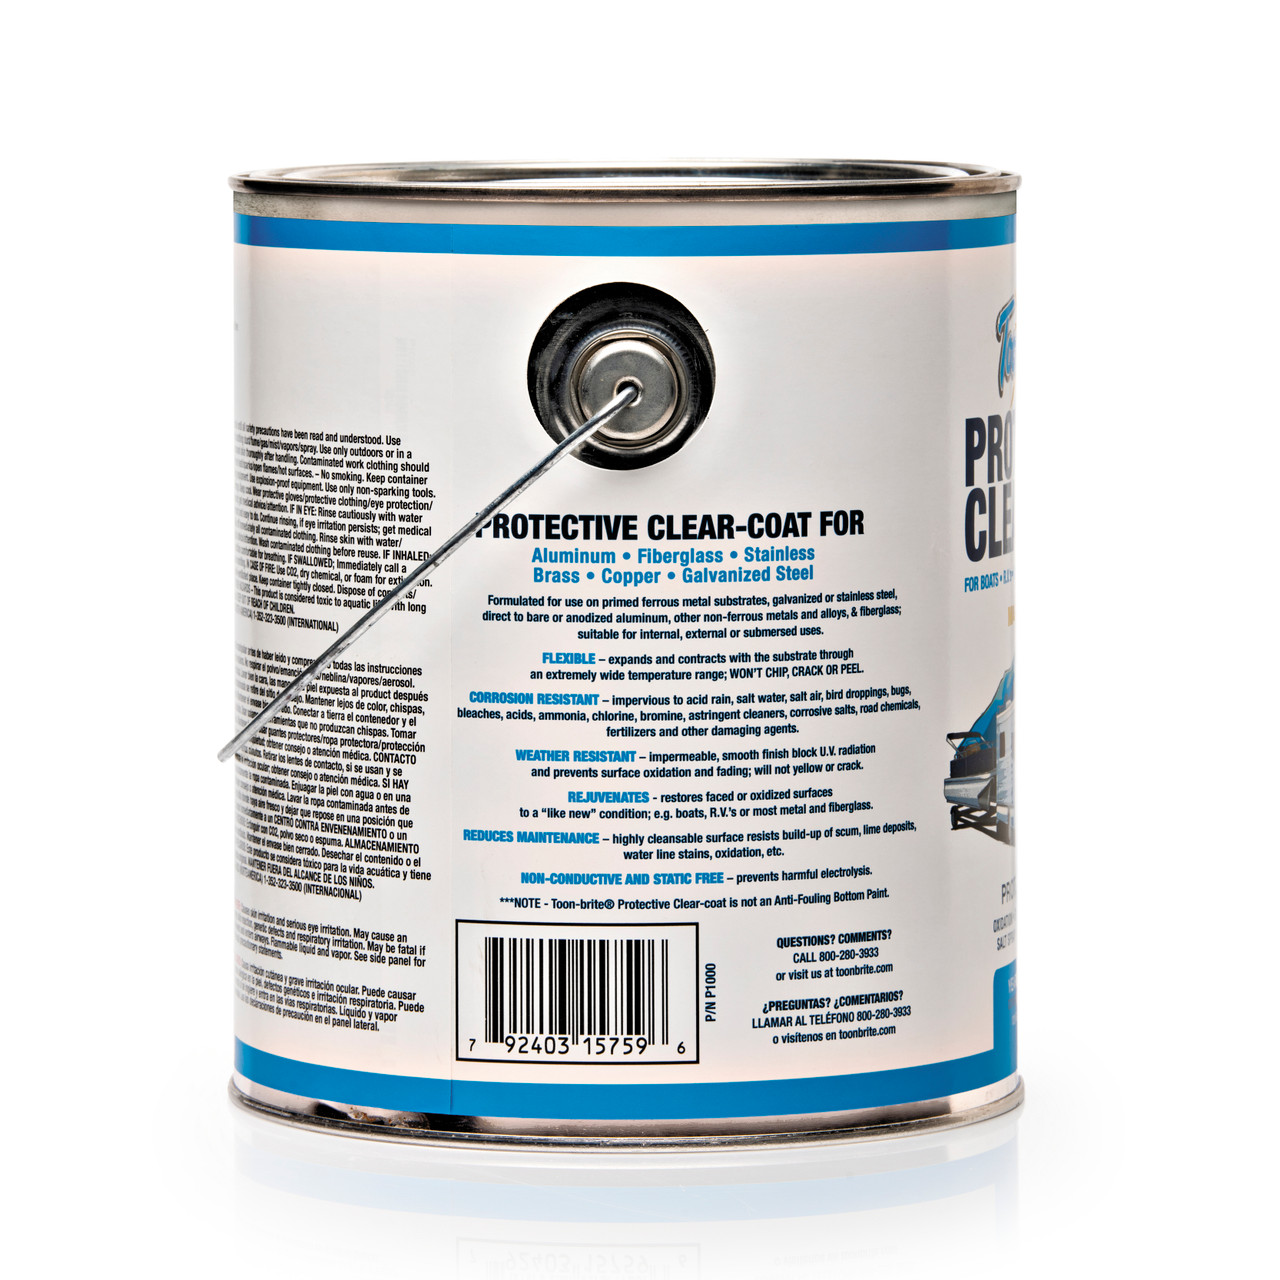 Toon-Brite BP1000 Aluminum Cleaner & Protective Clear-Coat Kit